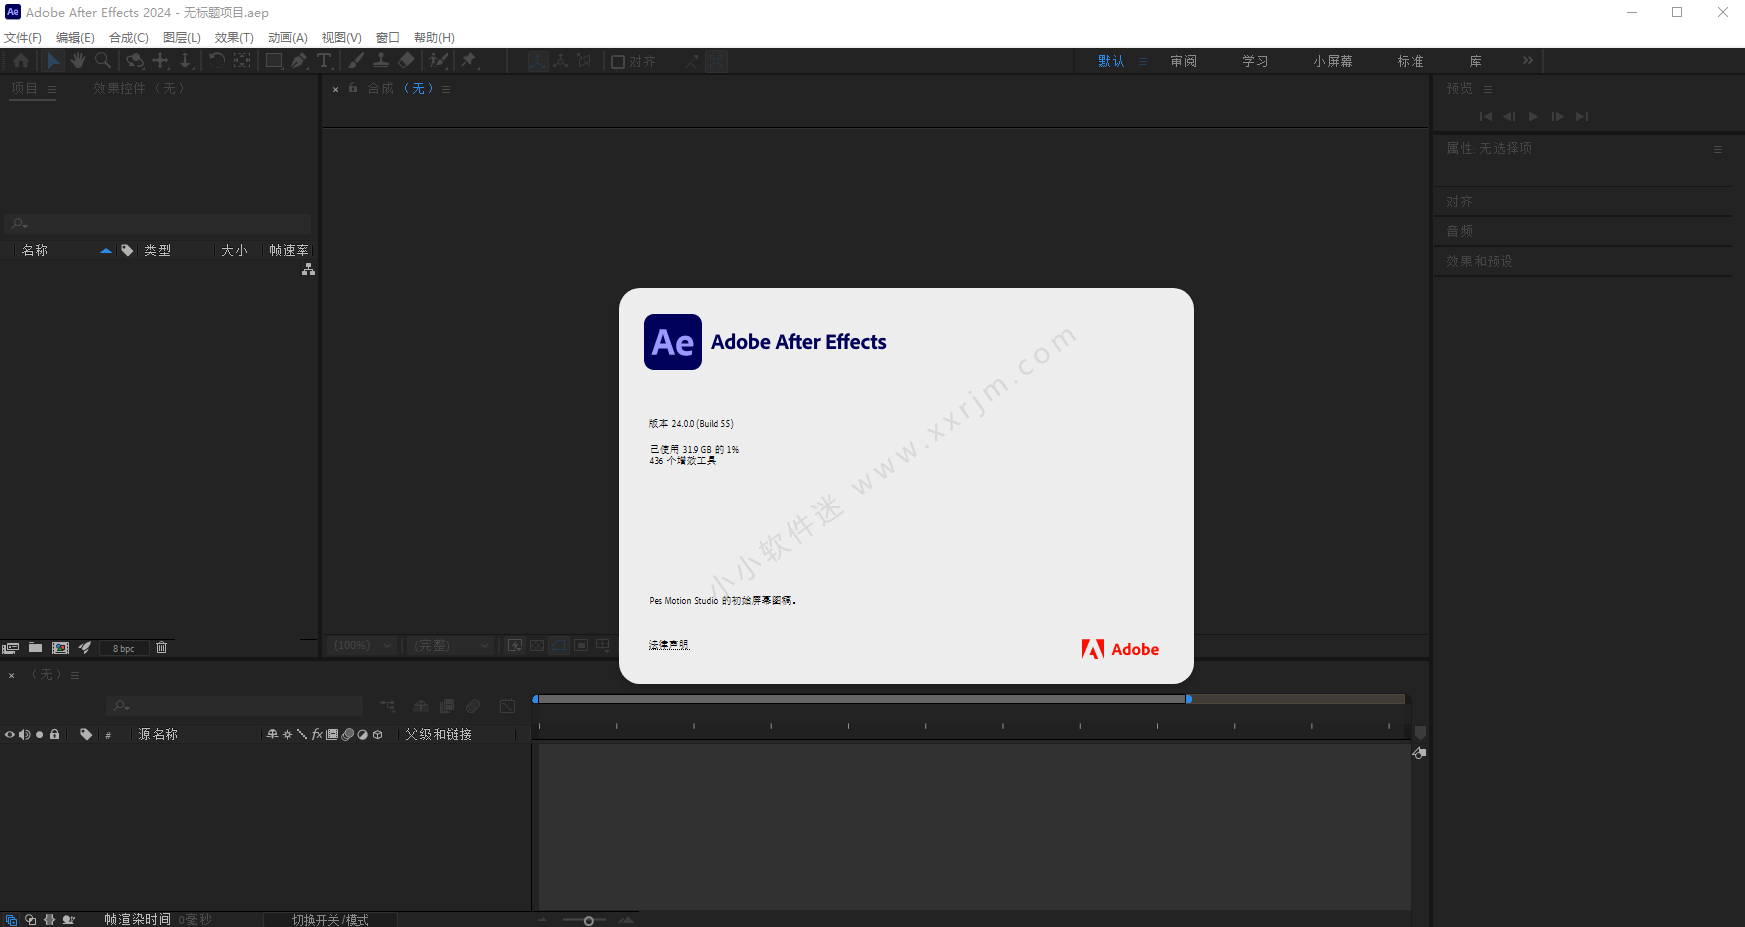 Adobe After Effects 2024 v24.0.0.55 free instal